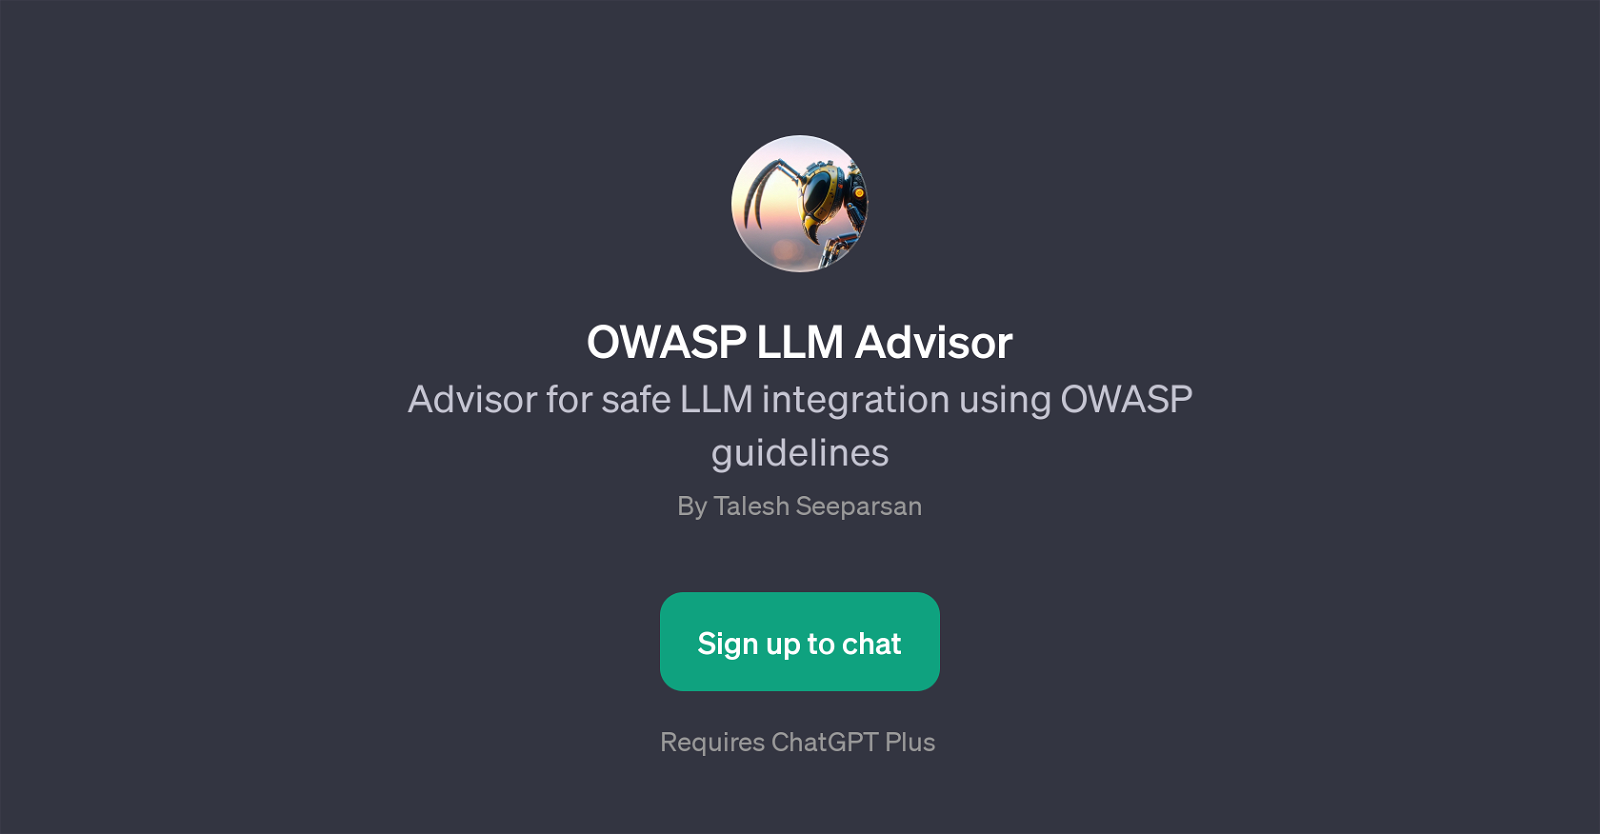 OWASP LLM Advisor website